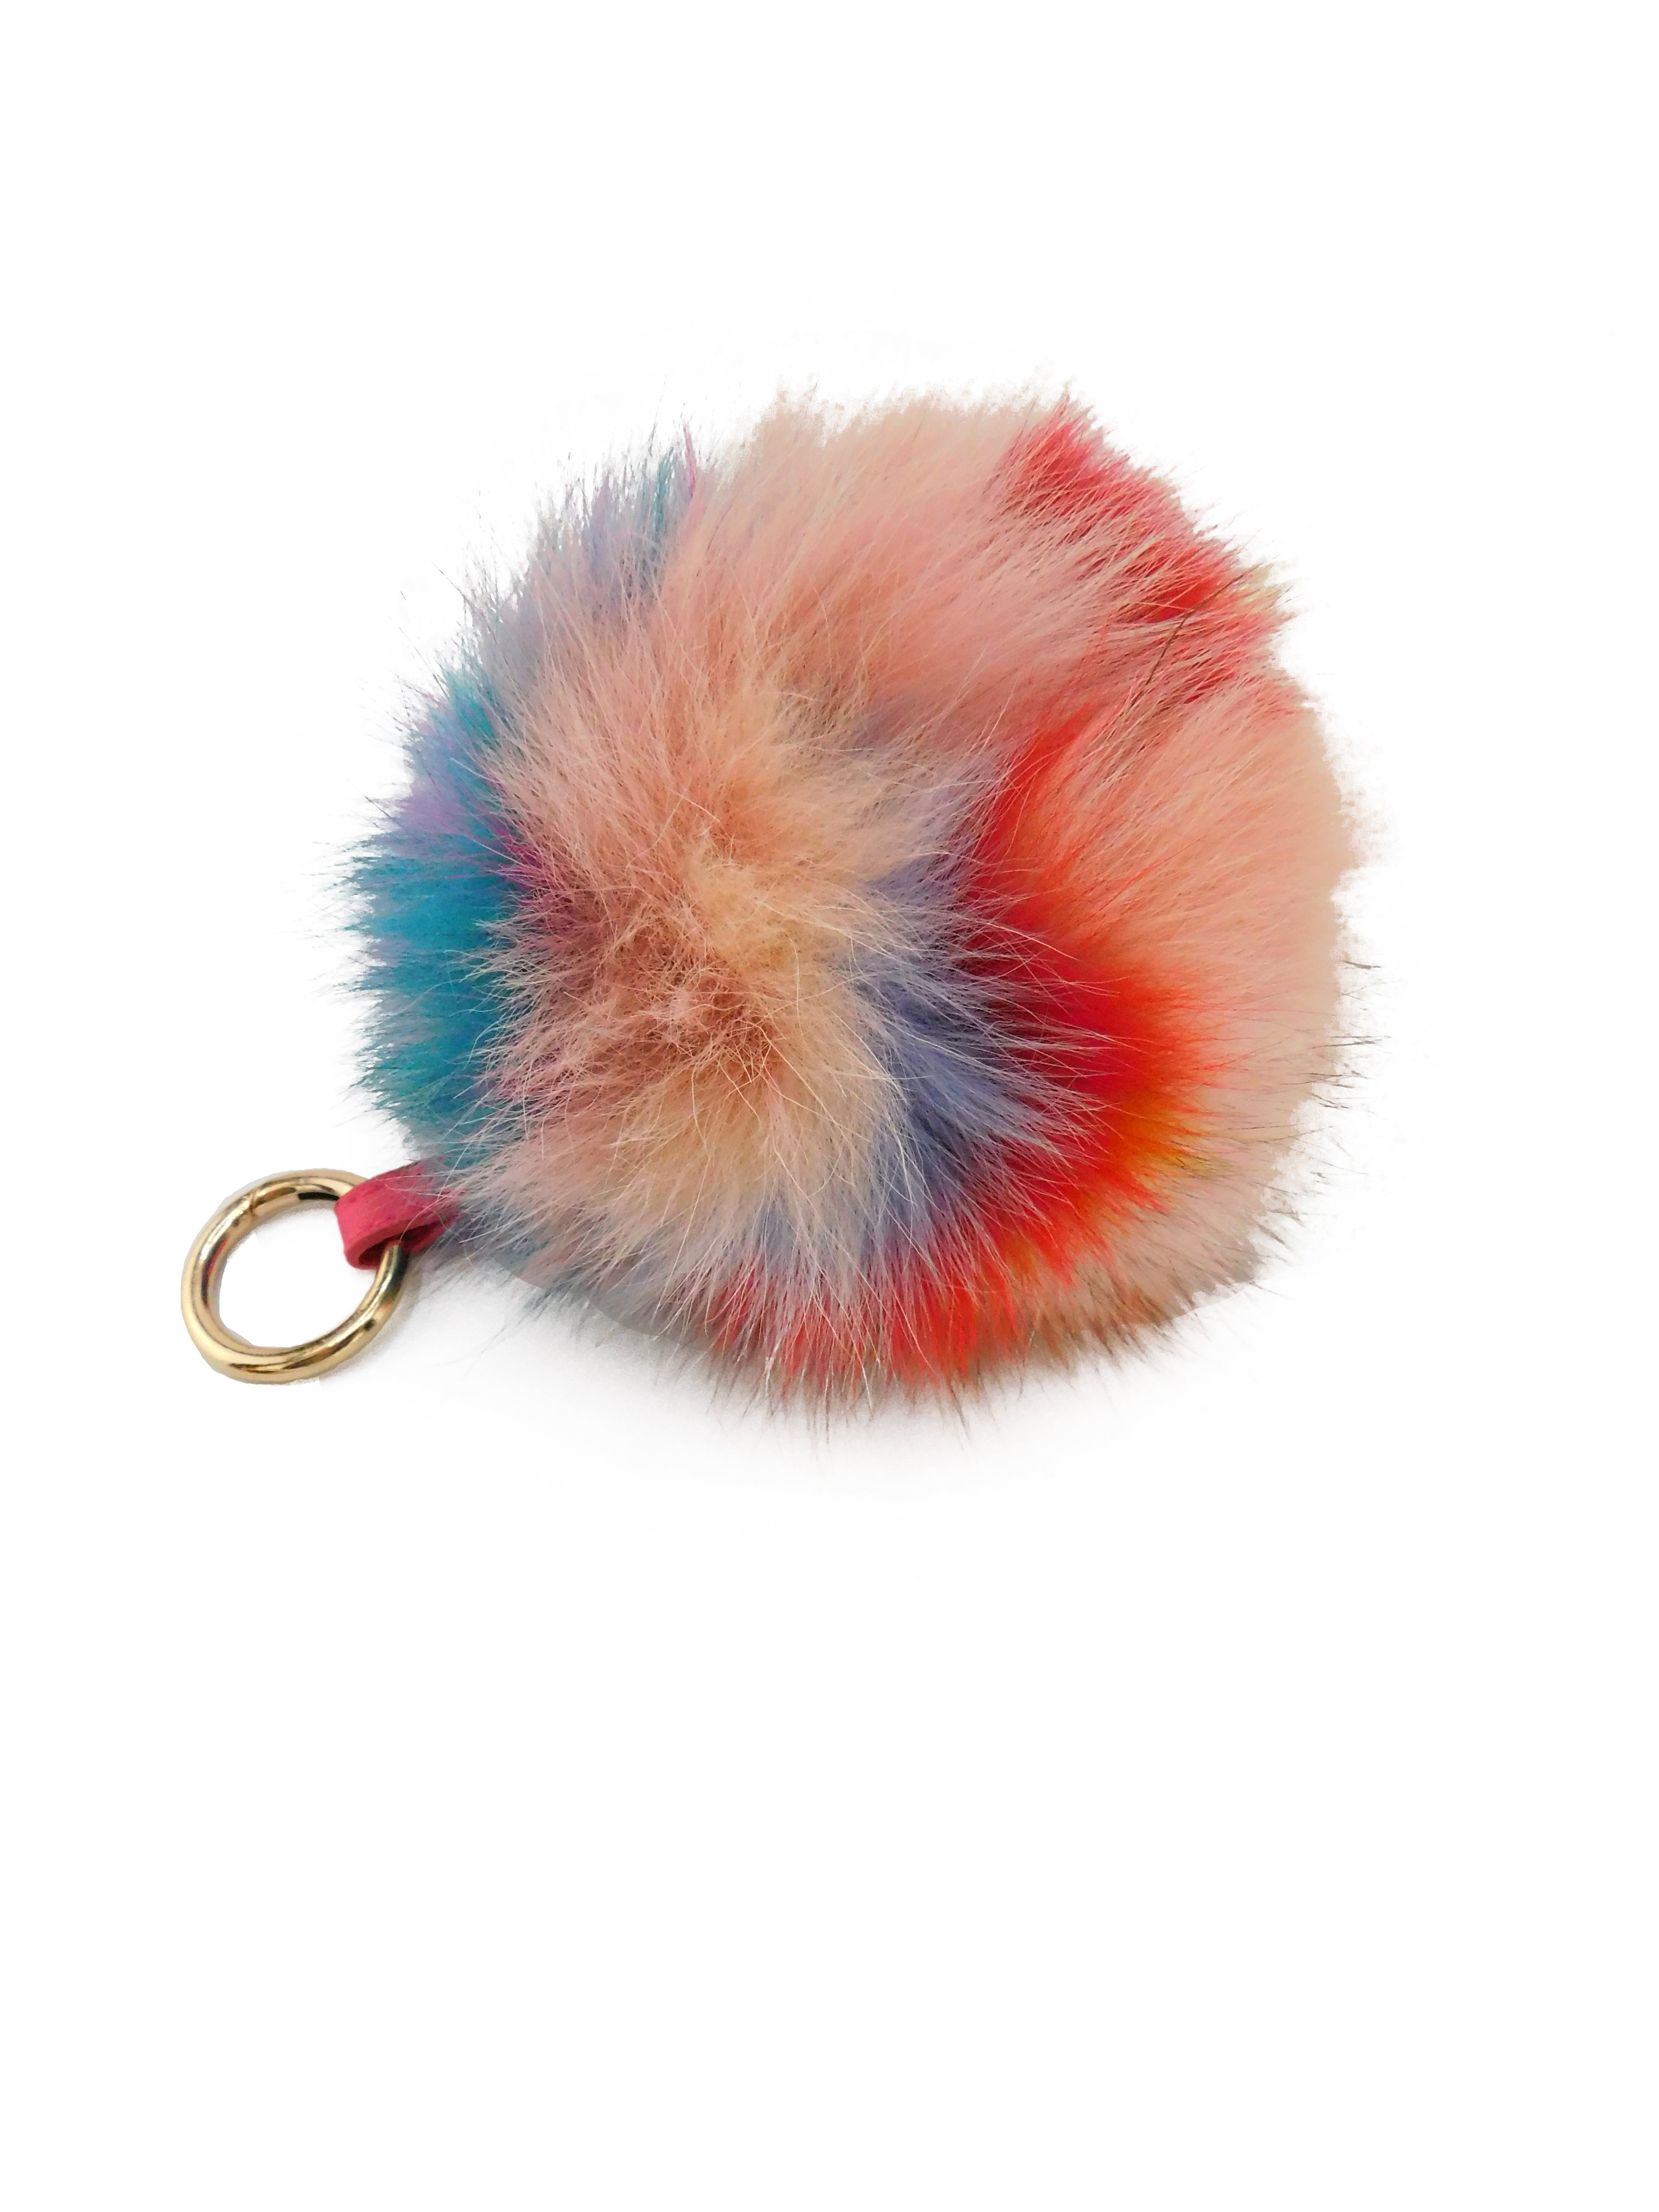 Fox and finnraccoon fur bag charm pompom black-grey color,pom pom keychain , fur ball, real fur bag accessory, Gift for women's and girls